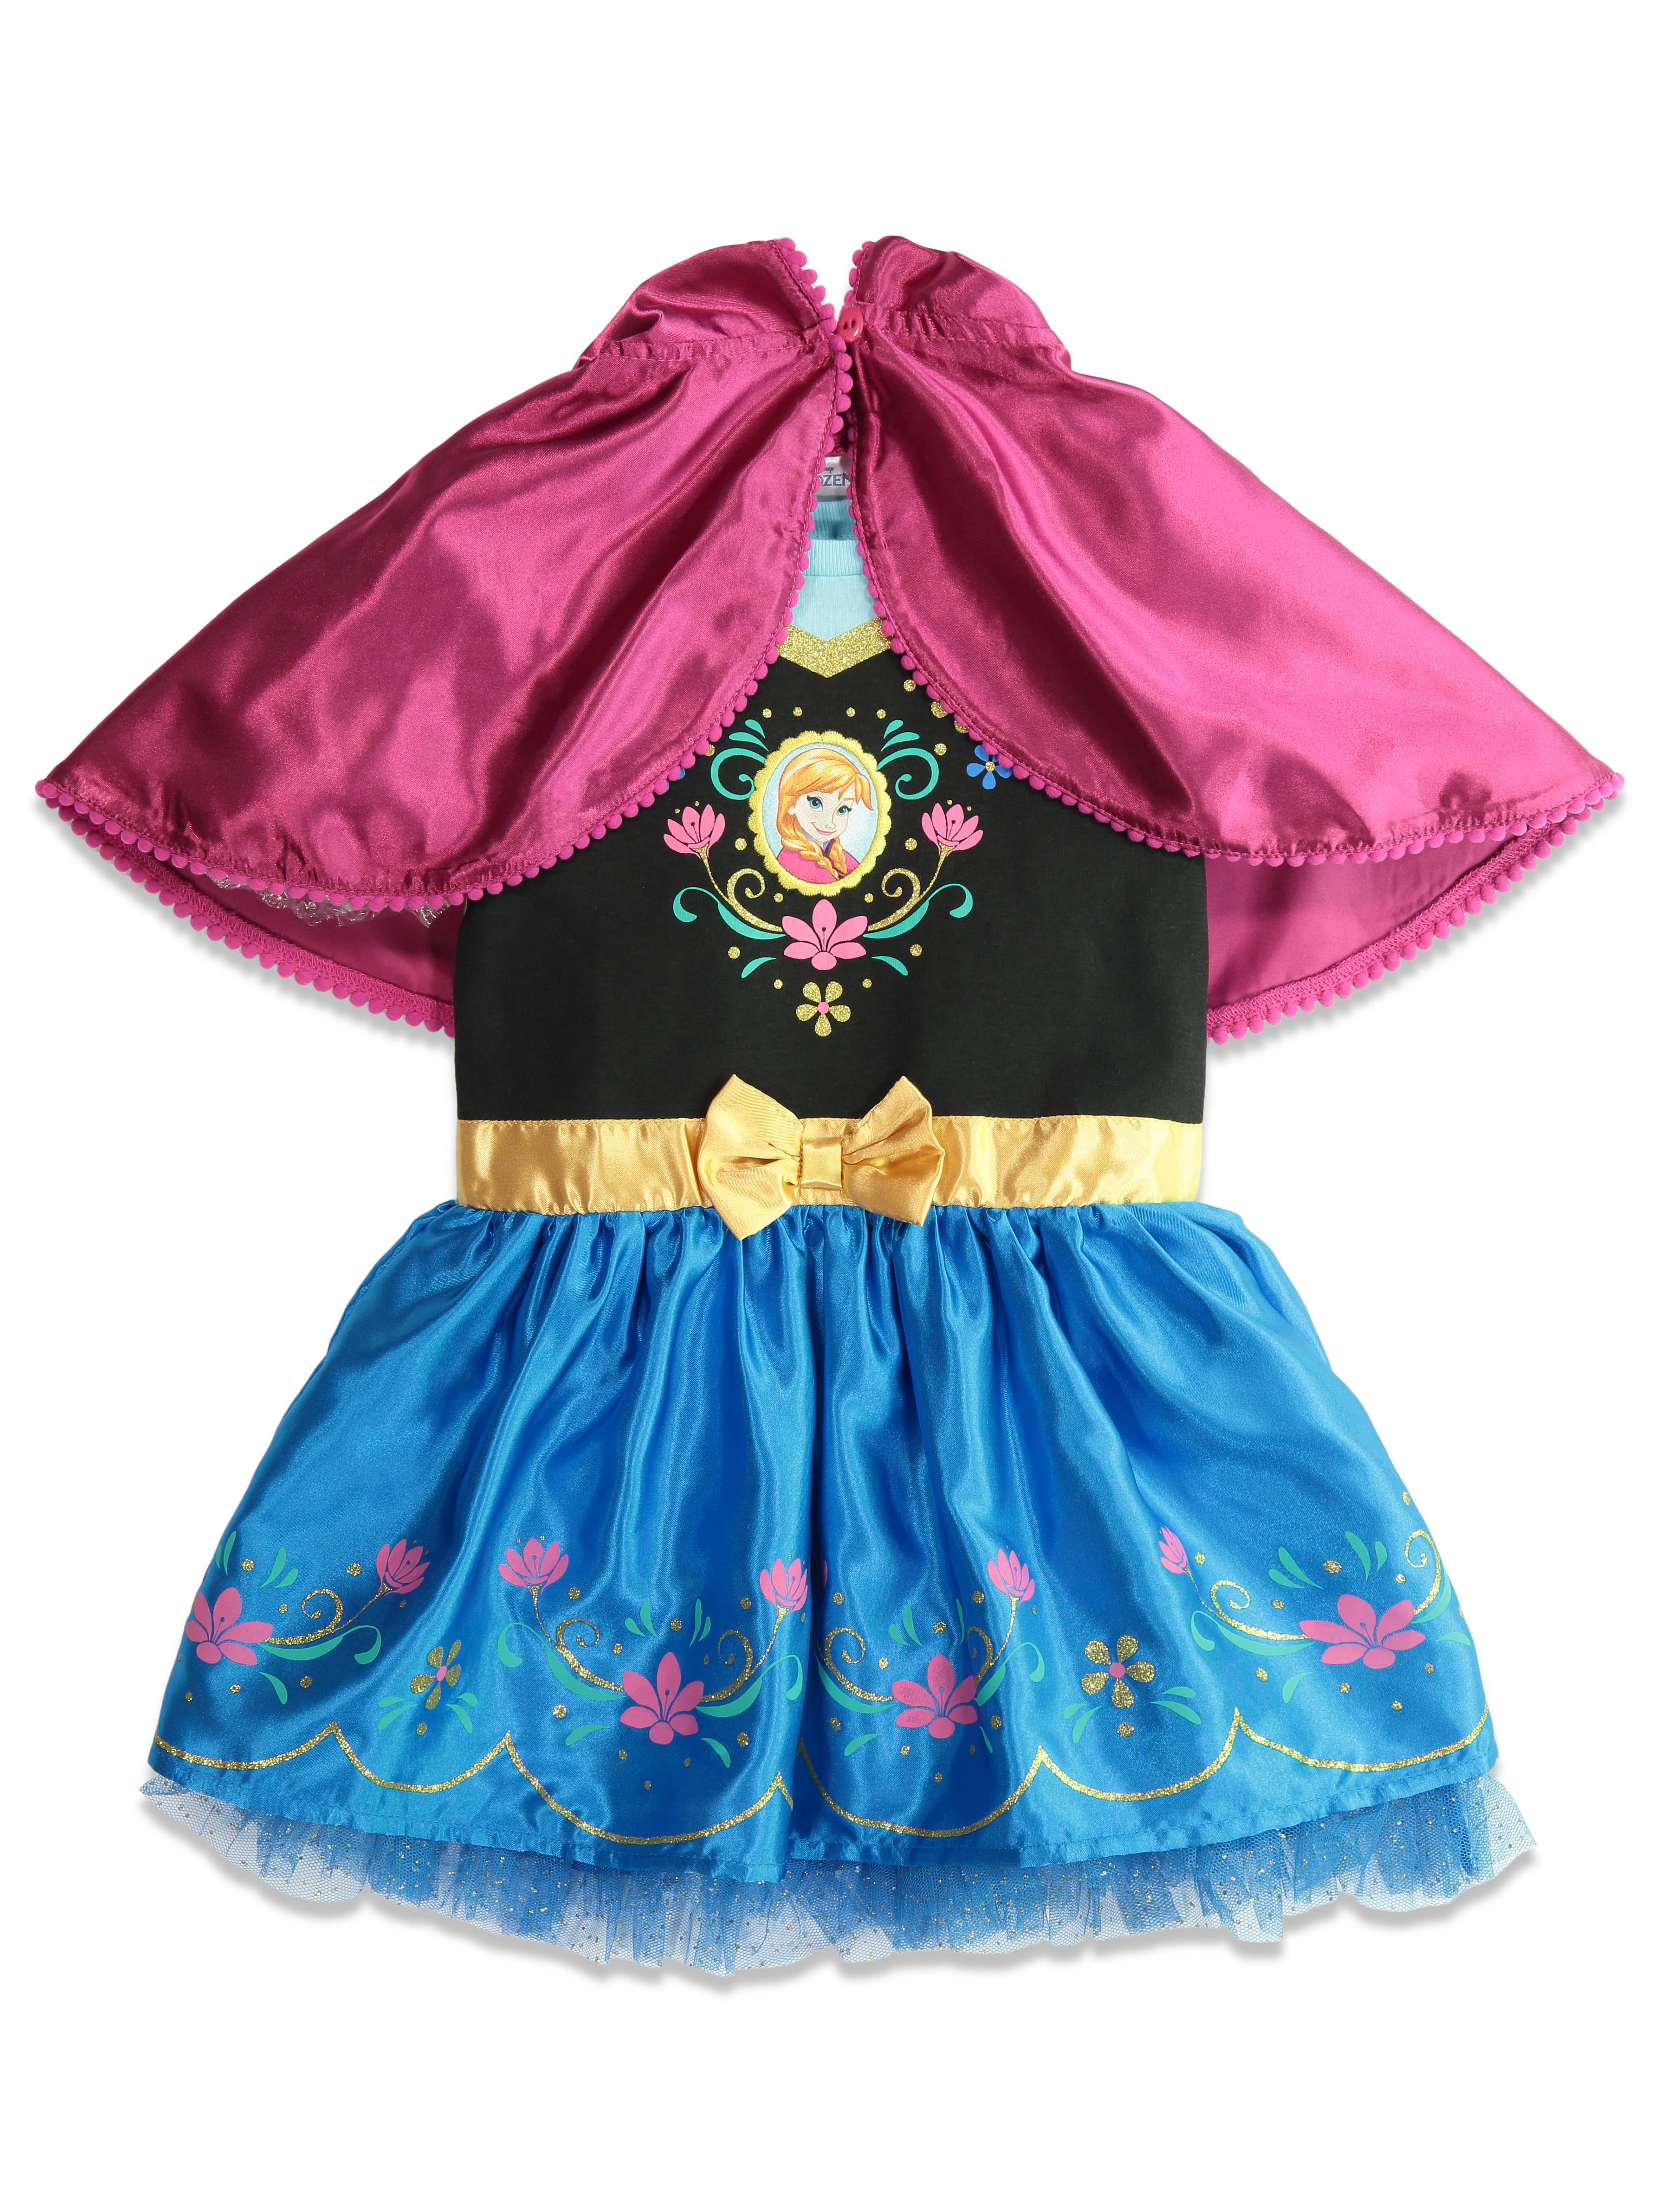 Cape Kids Girls Anna Elsa Princess Party Fancy Dress Up Cosplay Costume Dress